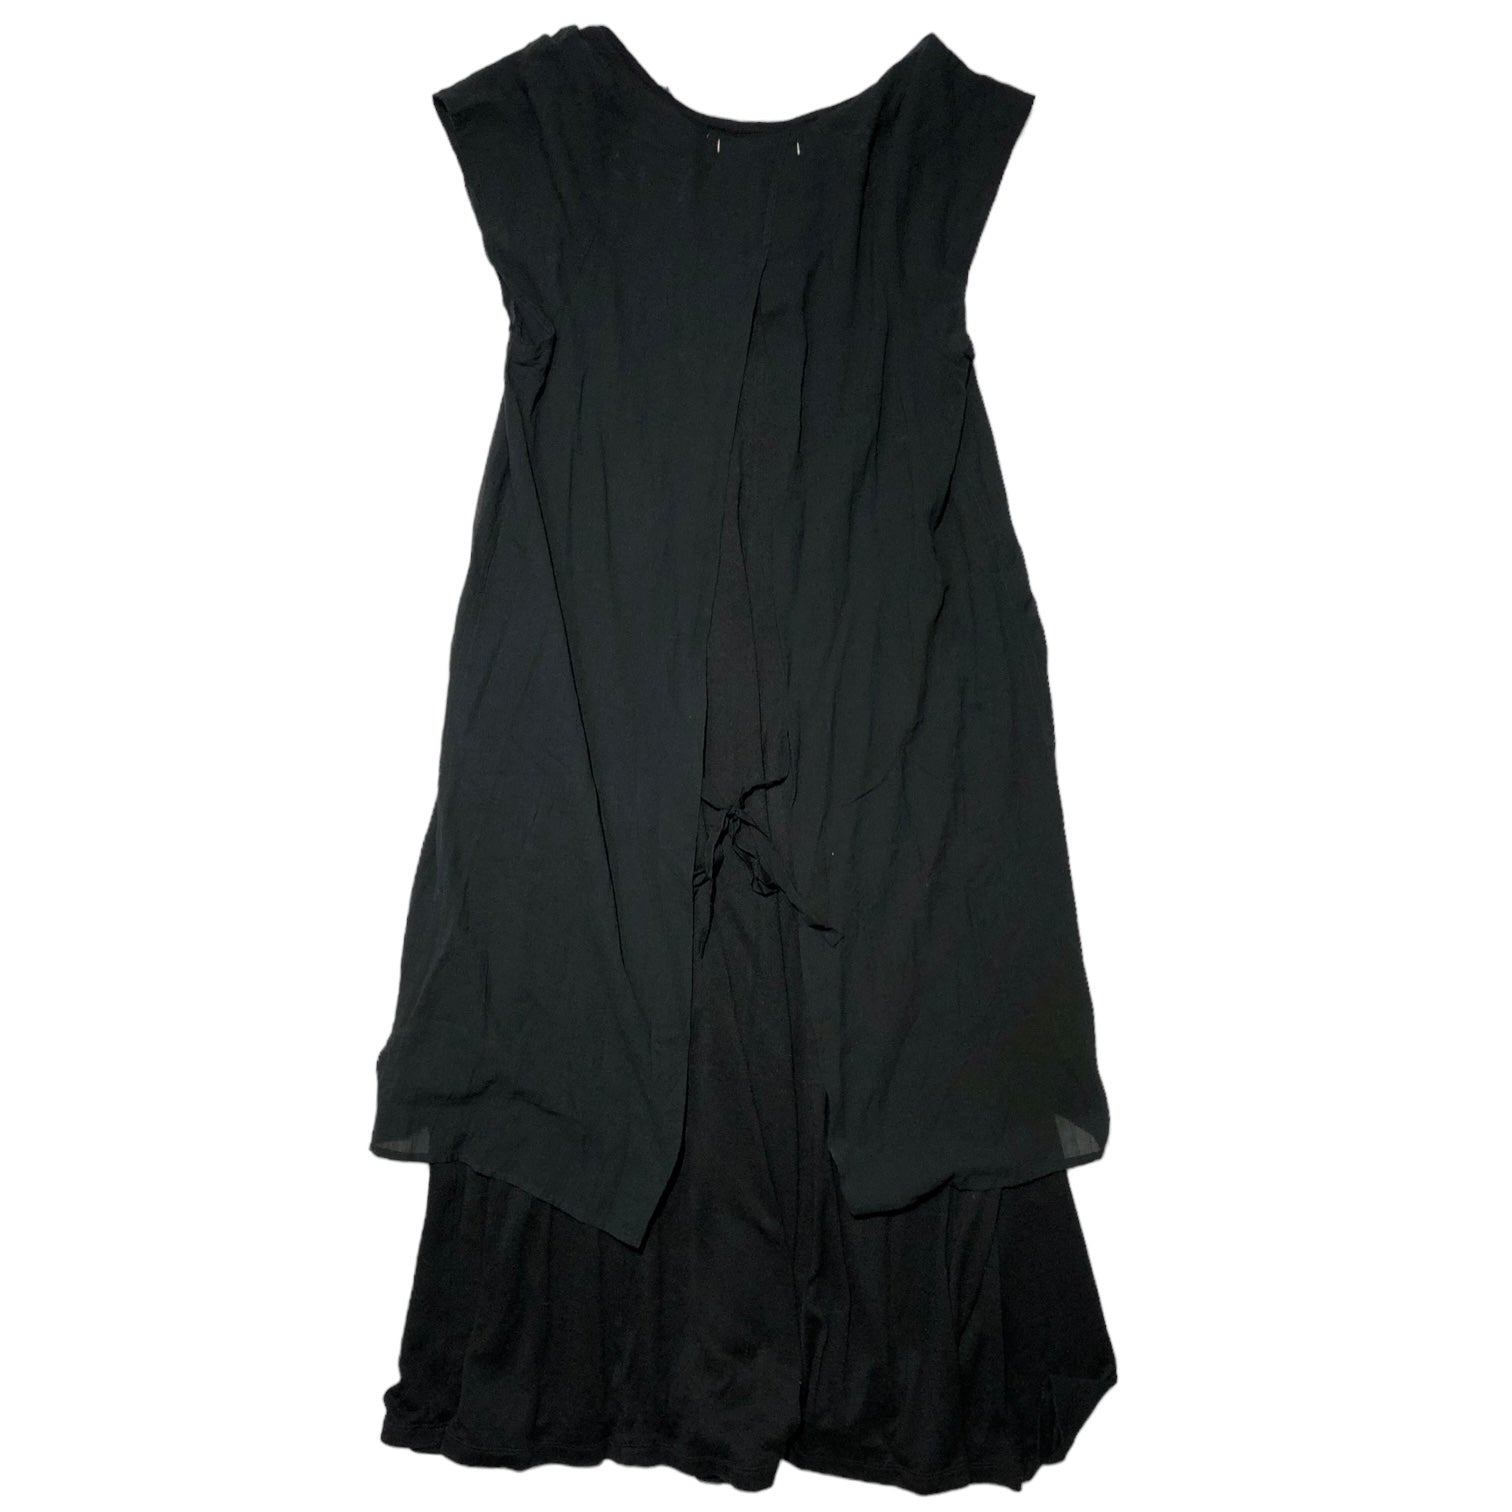 suzuki takayuki(スズキタカユキ) layered dress レイヤード ワンピース S161-07 1(S) ブラック 参考定価37,400円(税込)